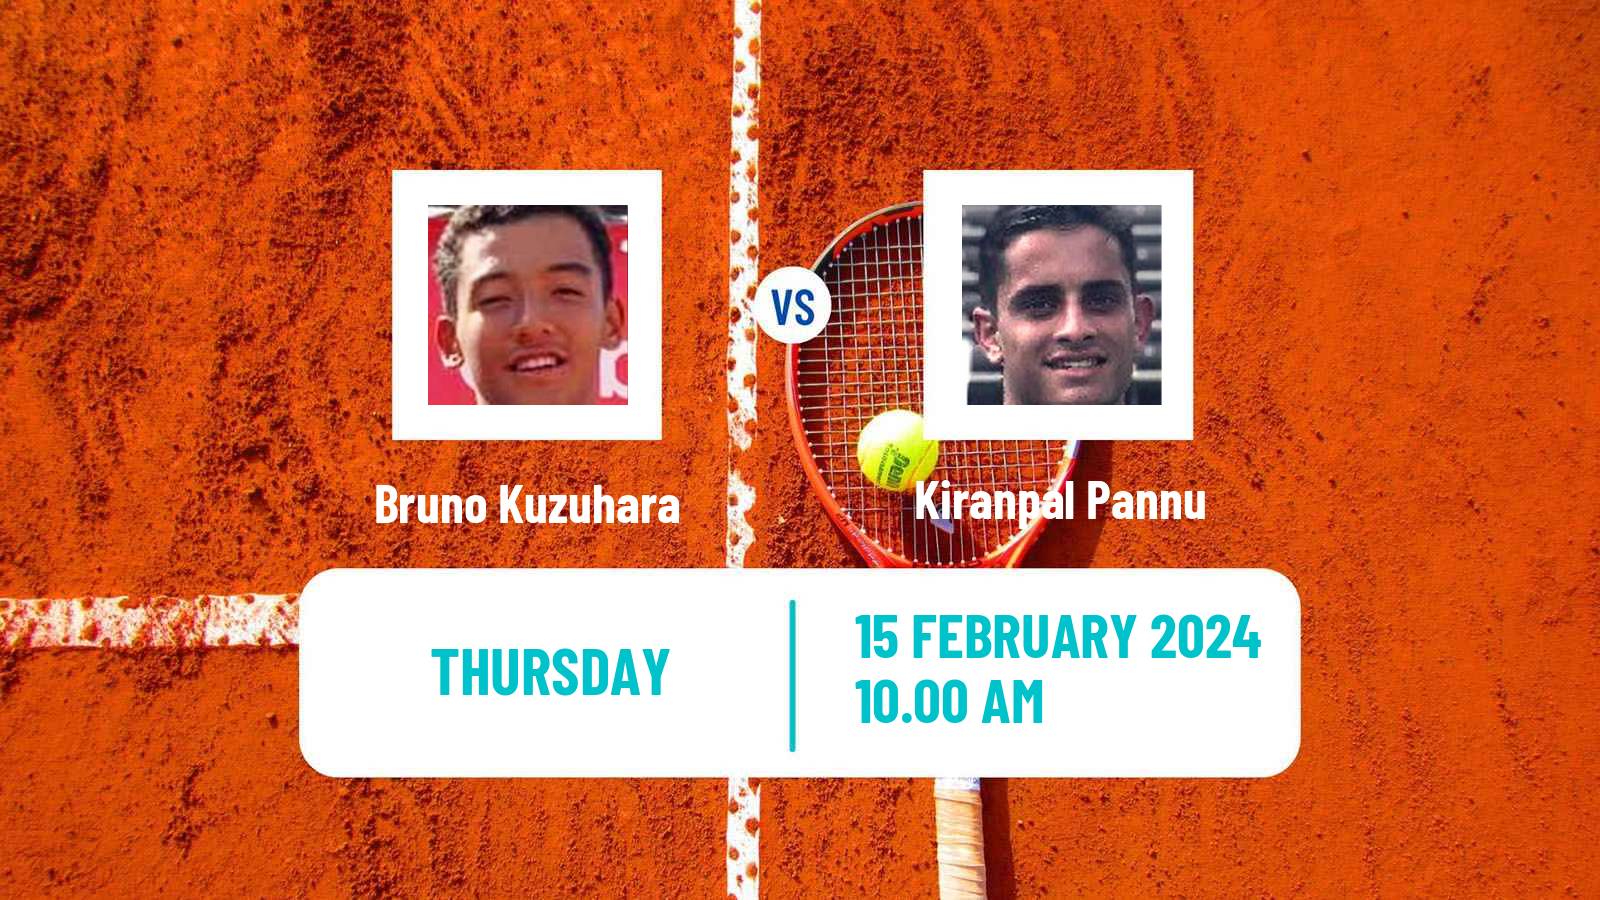 Tennis ITF M15 Palm Coast Fl Men Bruno Kuzuhara - Kiranpal Pannu